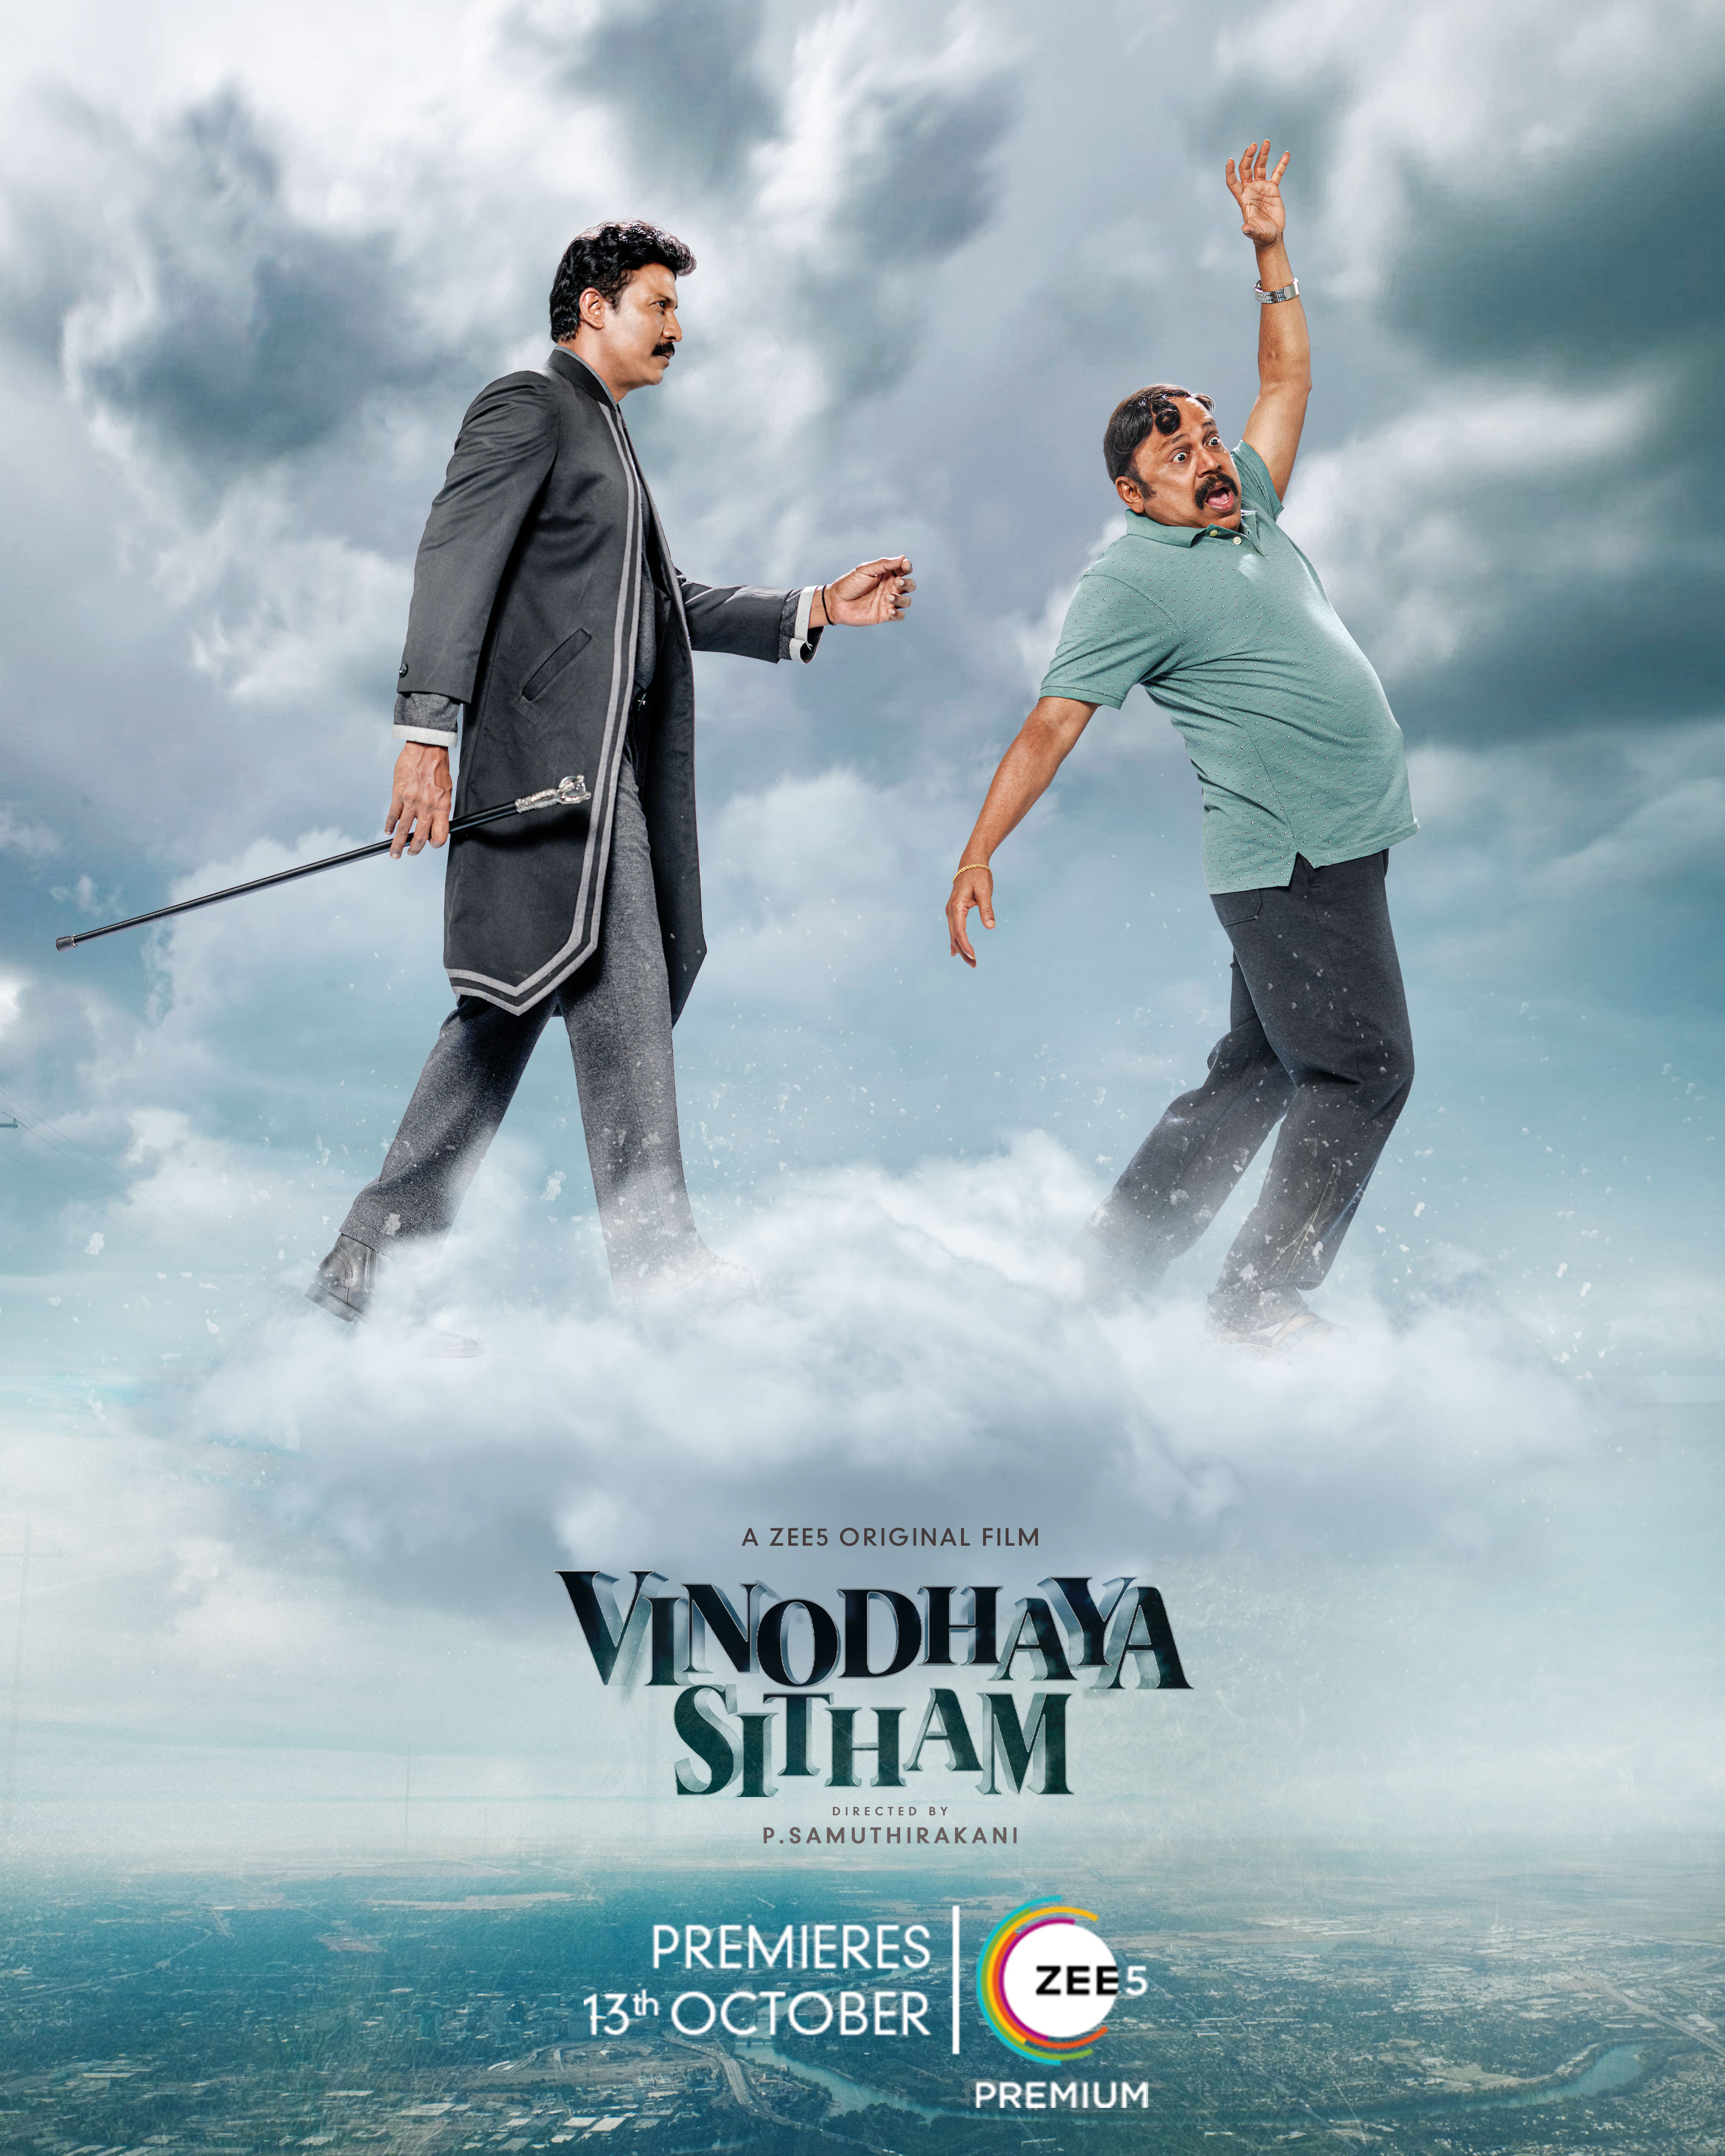 Vinodhaya Sitham movie